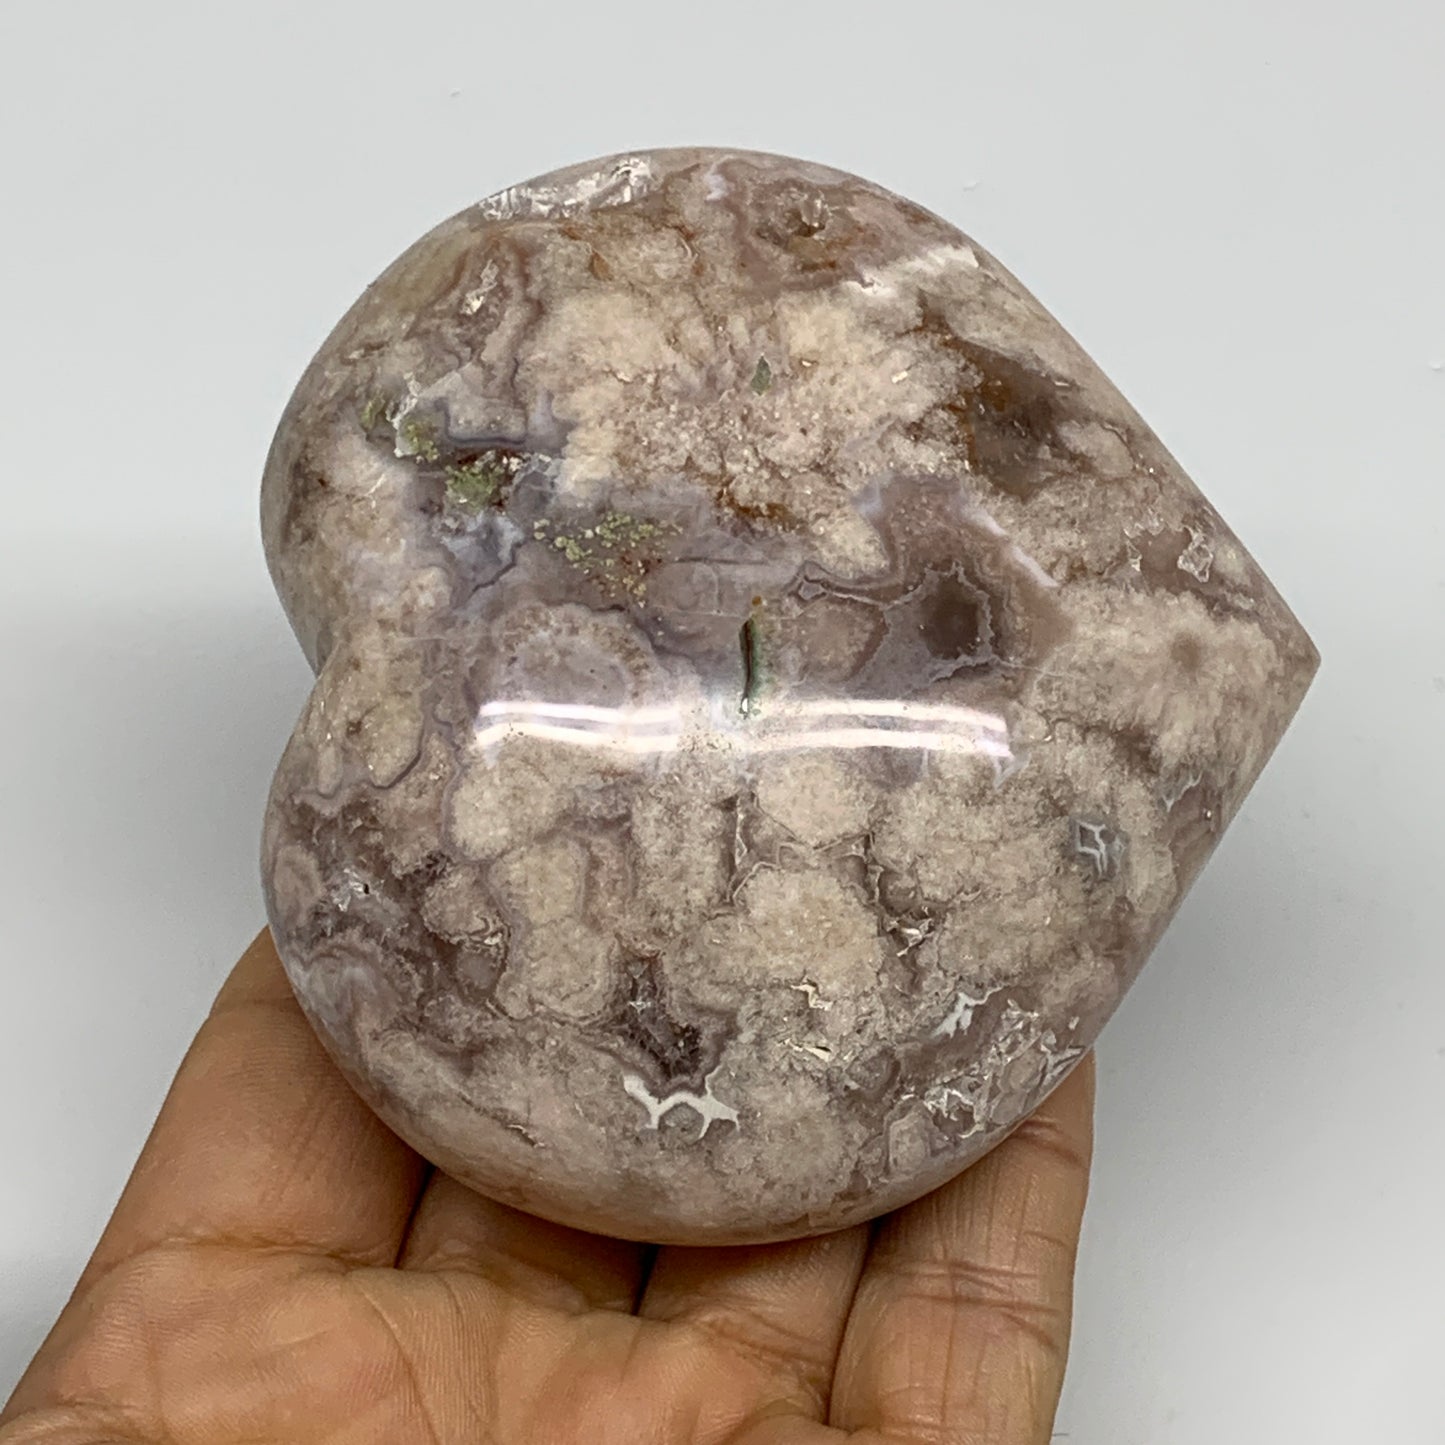 0.76 lbs, 3.2"x3.4"x1.5", Flower Agate Heart Crystal, Blossom Agate, B30992